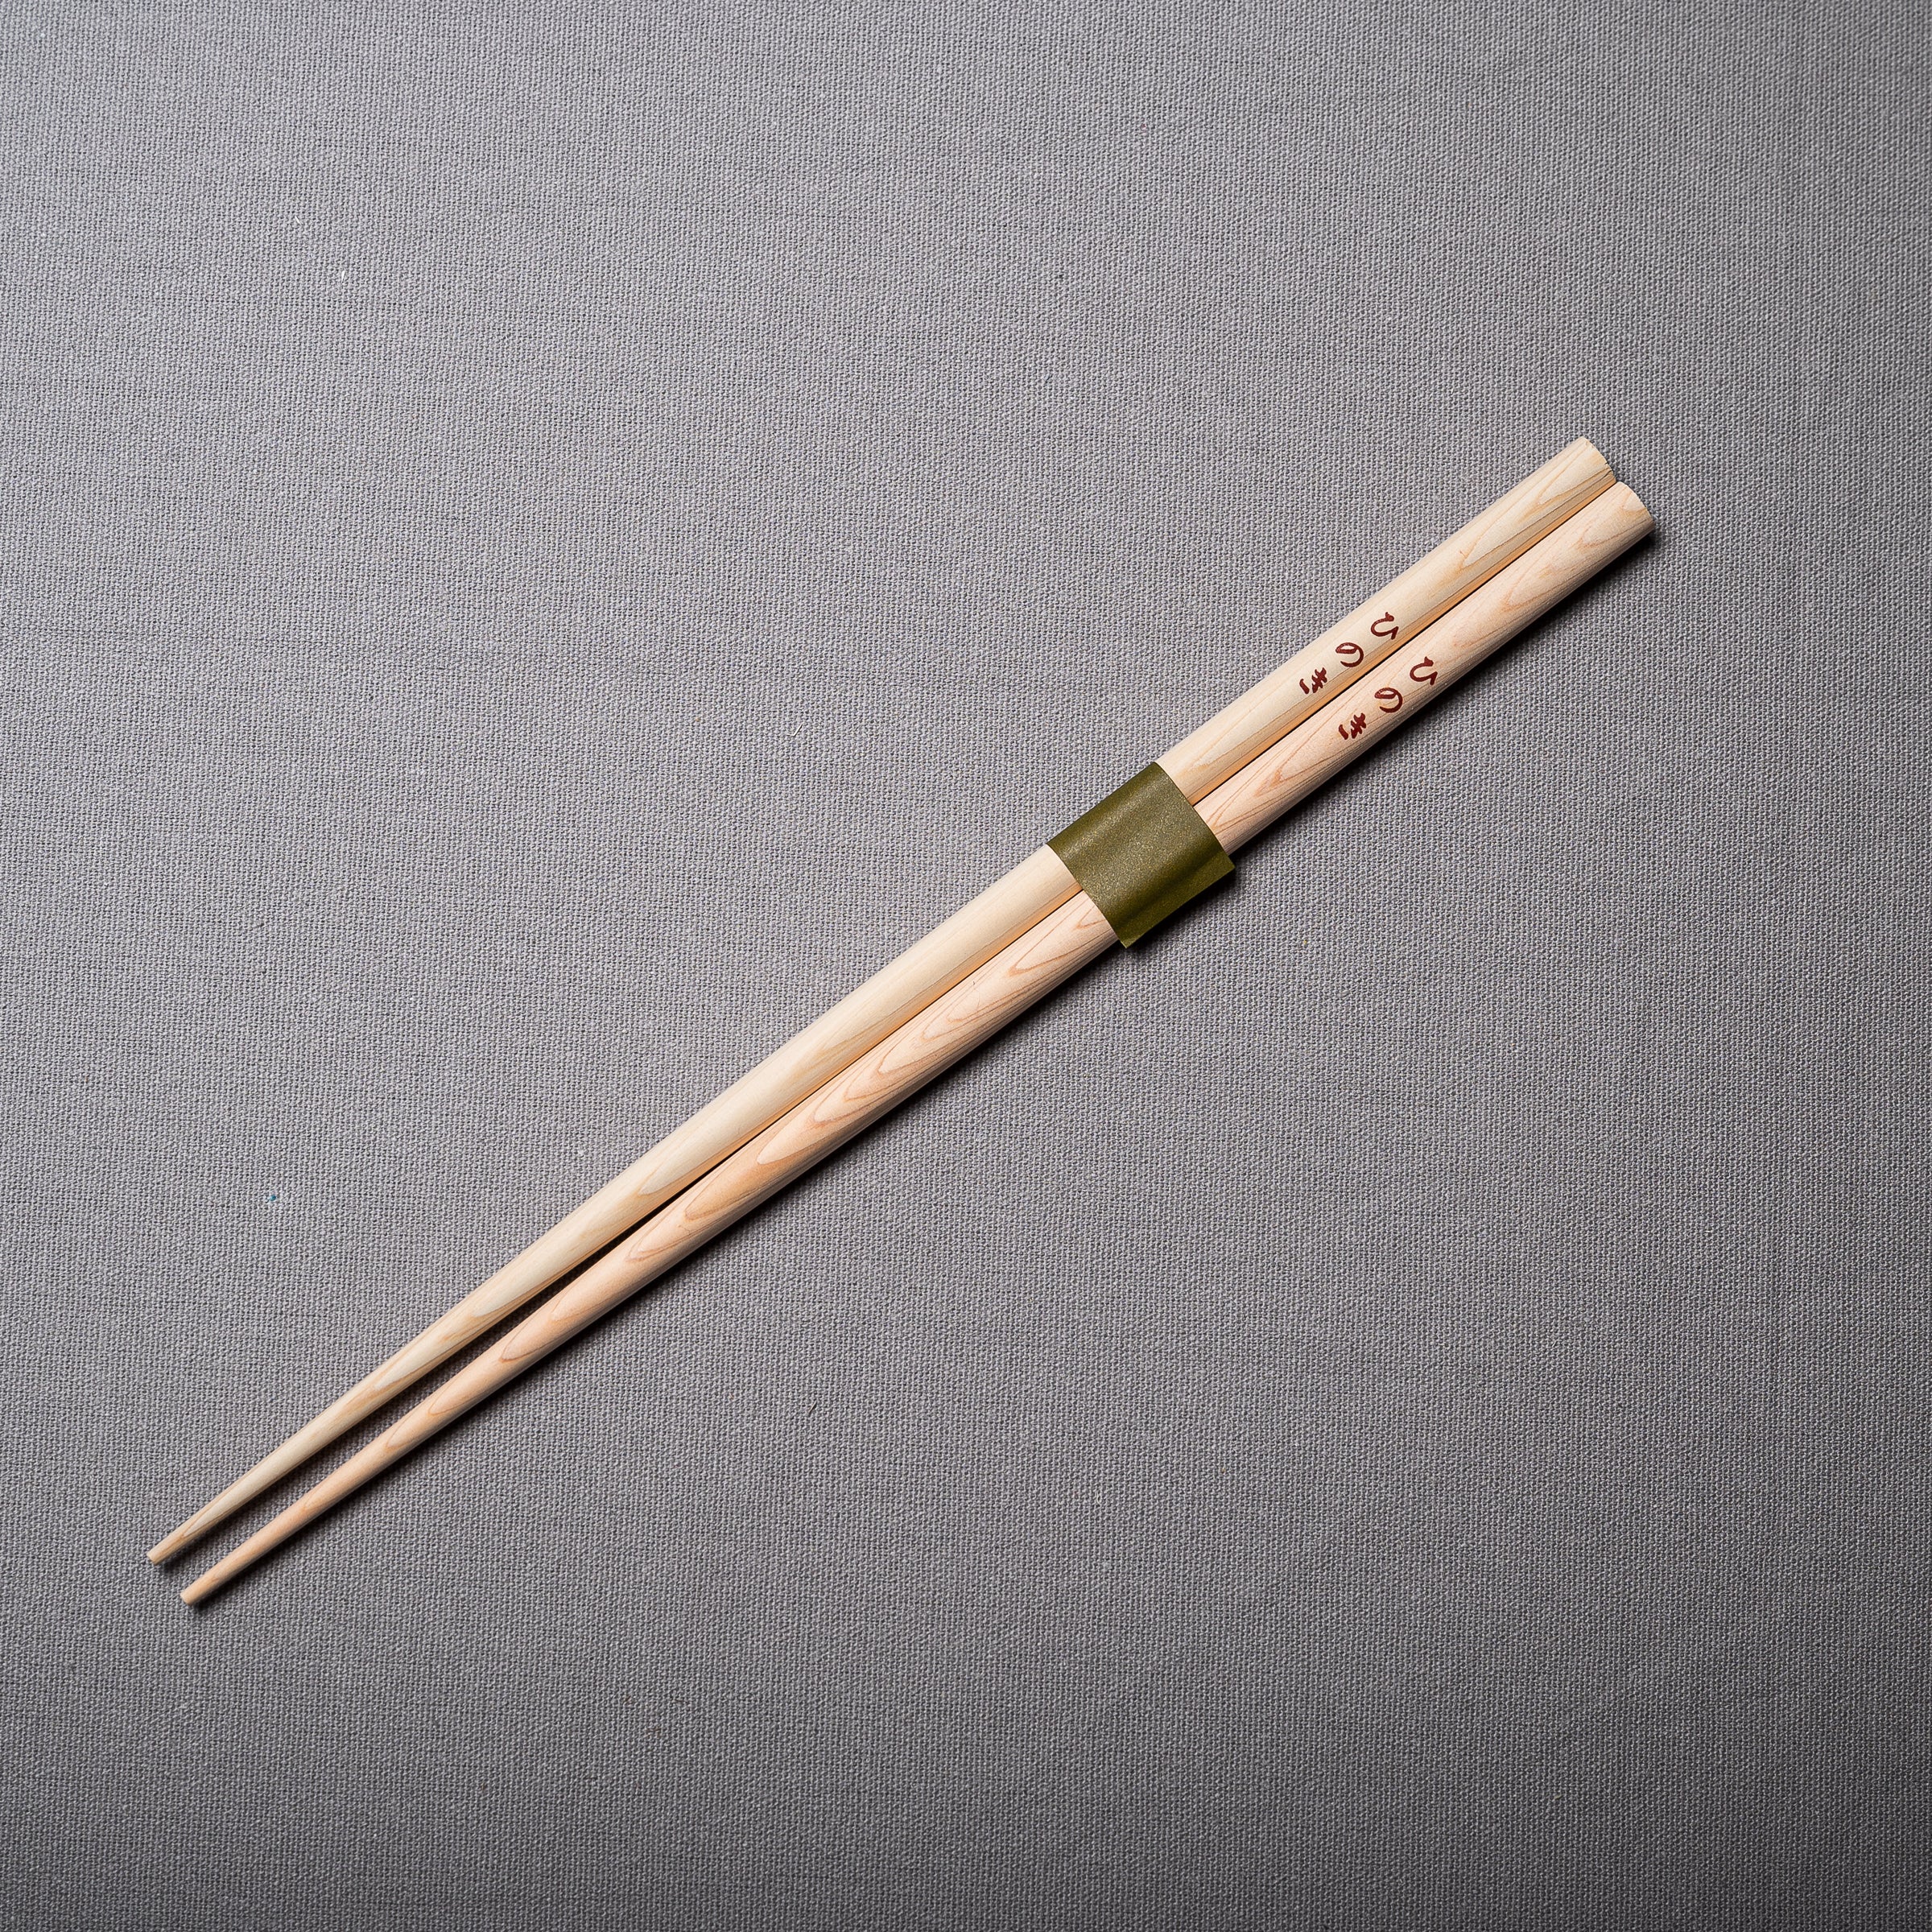 Hinoki Wood Cooking Chopsticks - Round